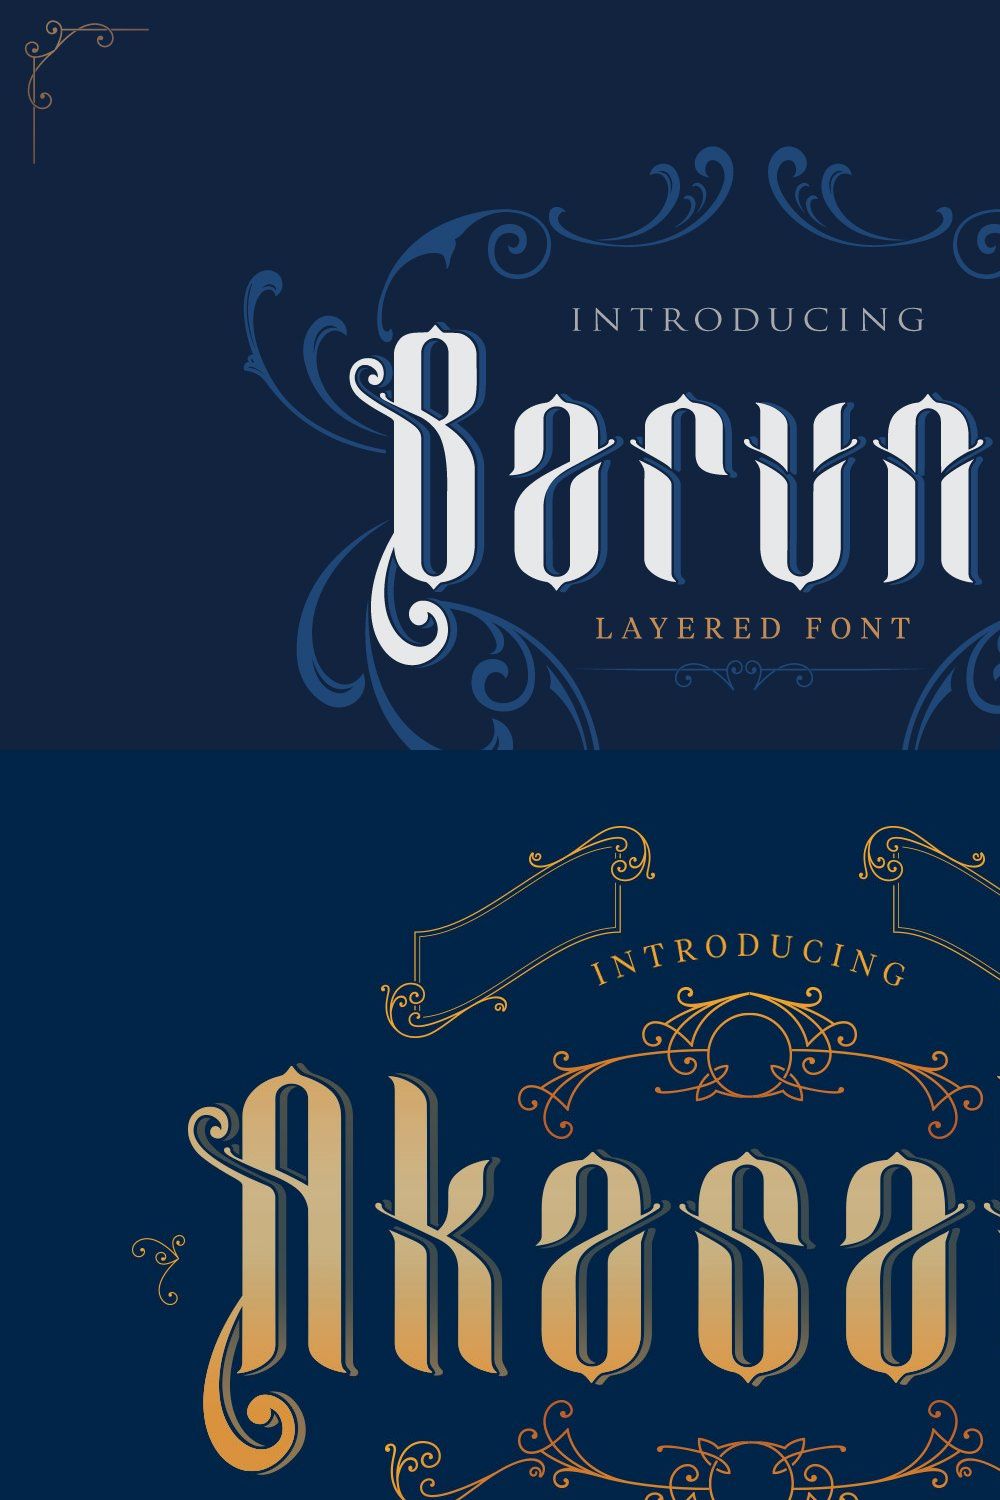 Baruna - Layered font - Sale pinterest preview image.